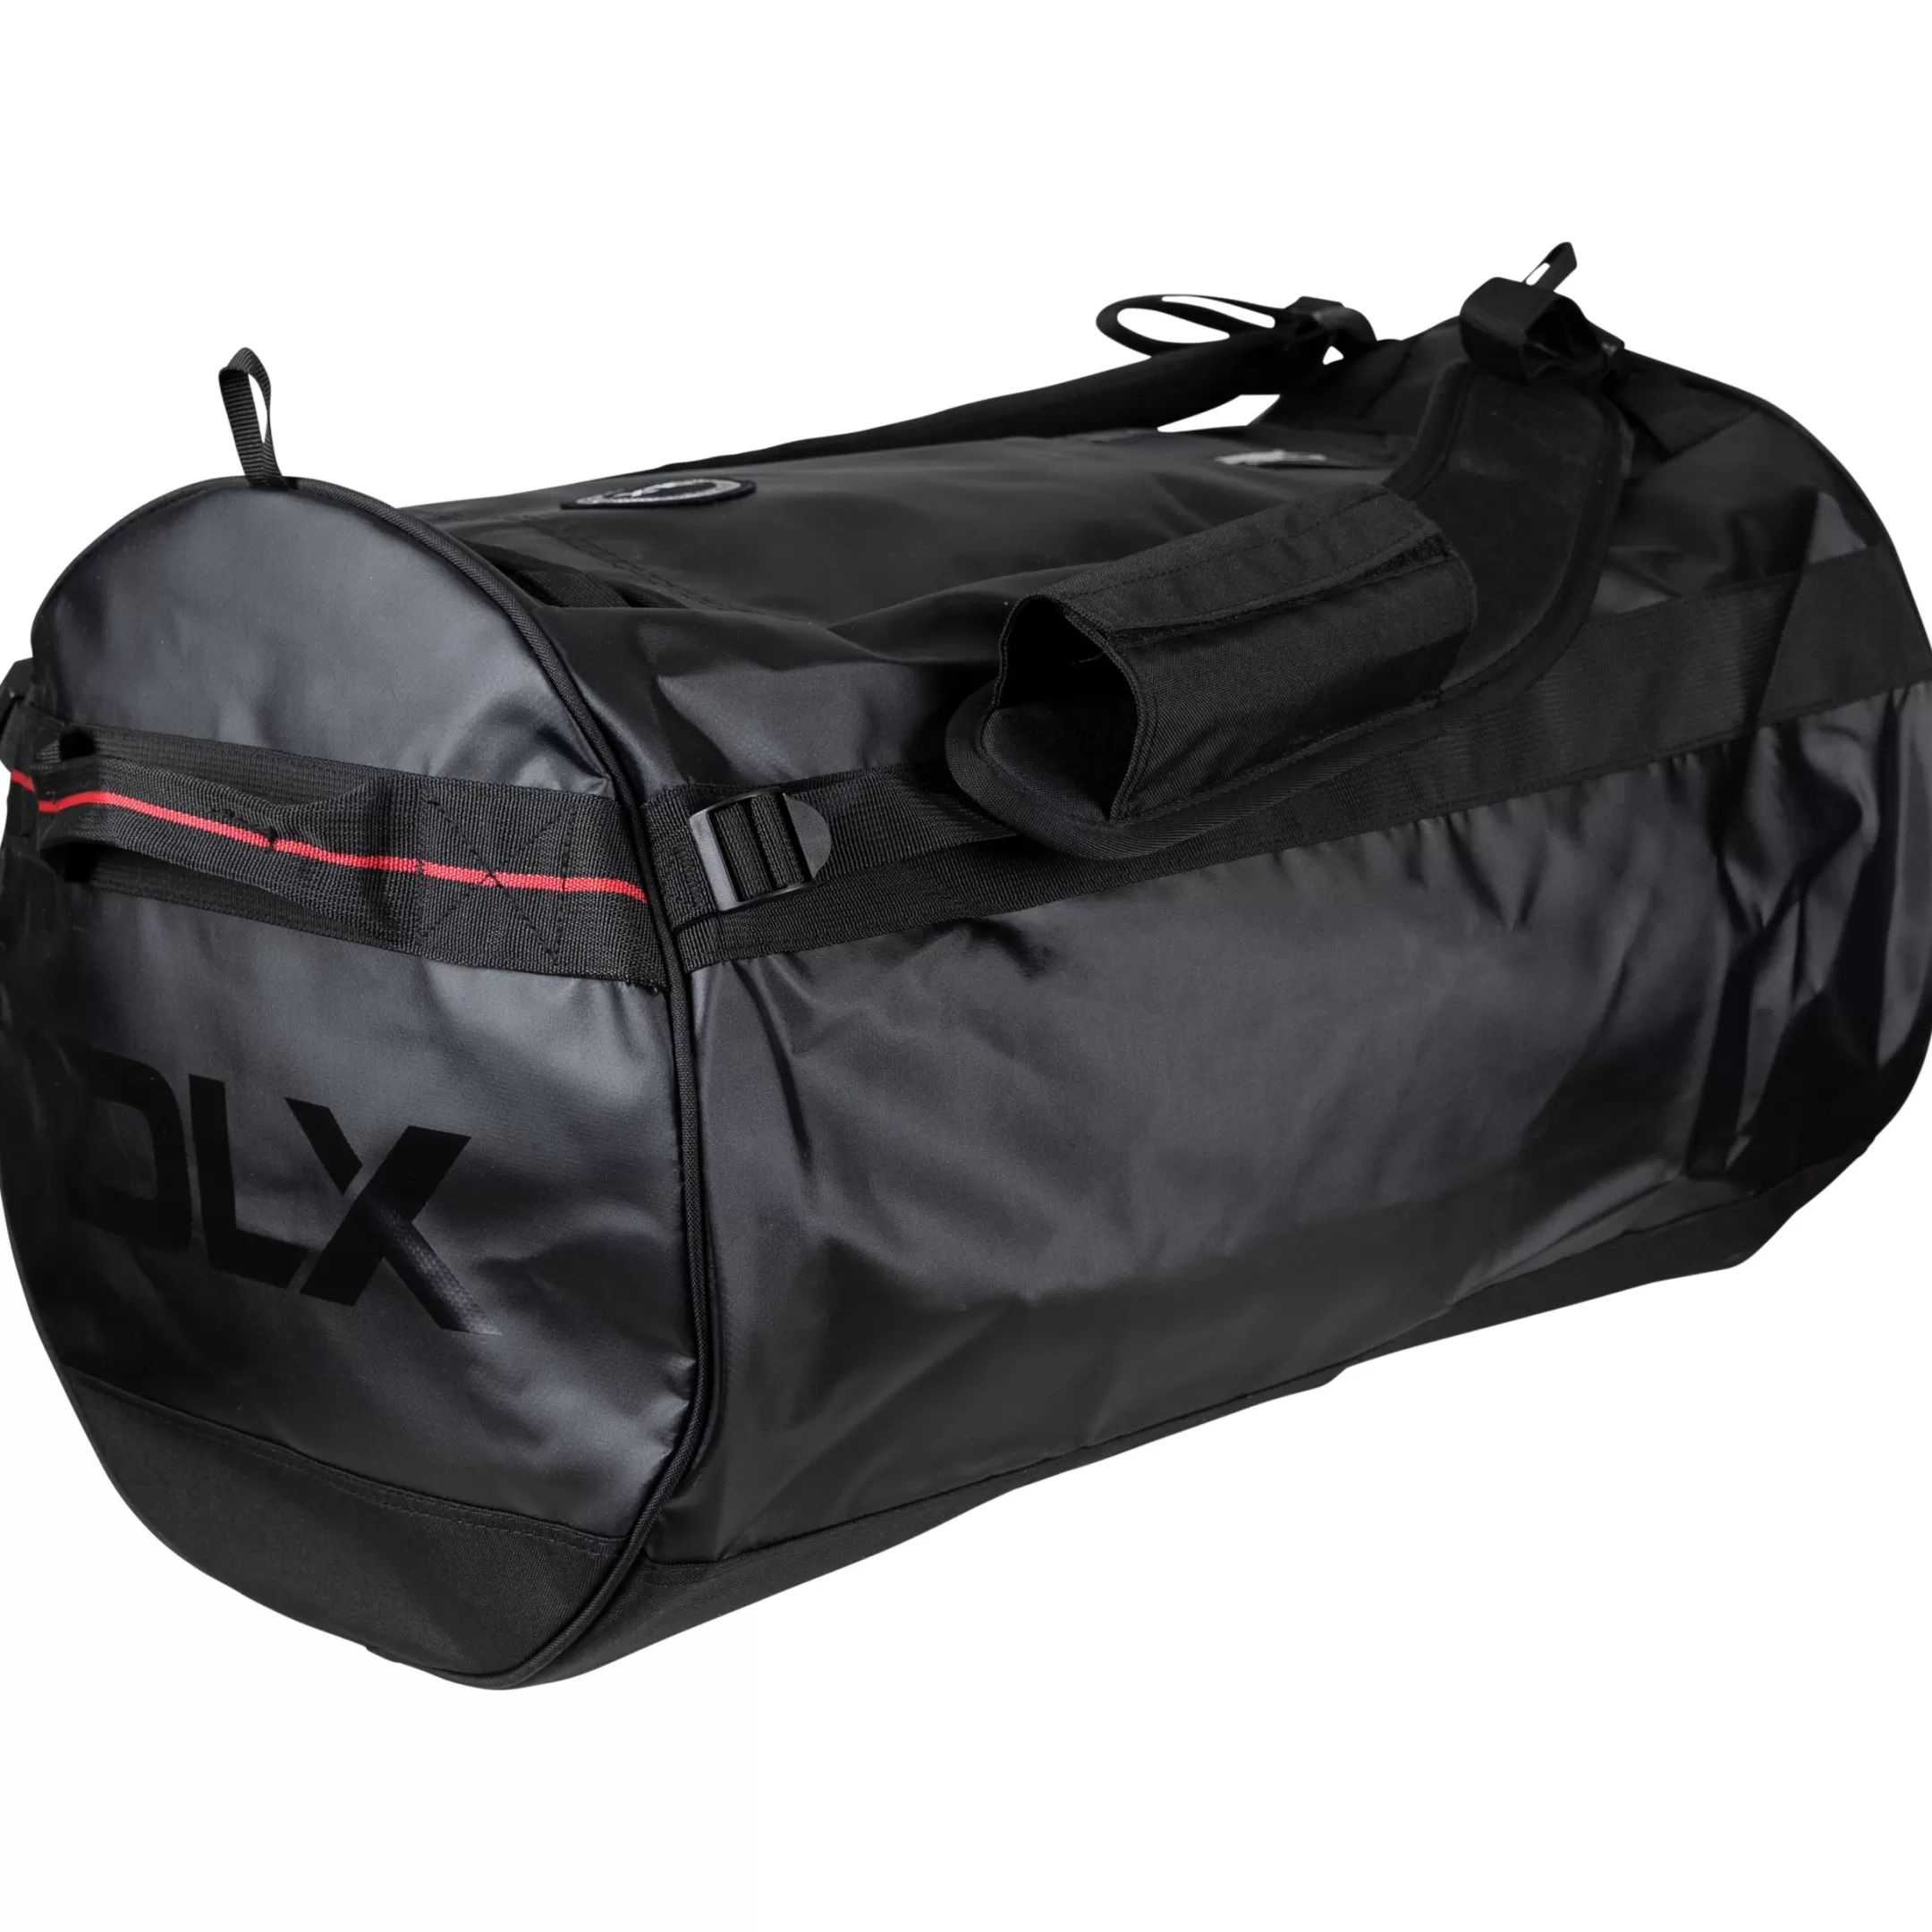 DLX 70L Duffle Bag Marnock70 | Trespass Sale